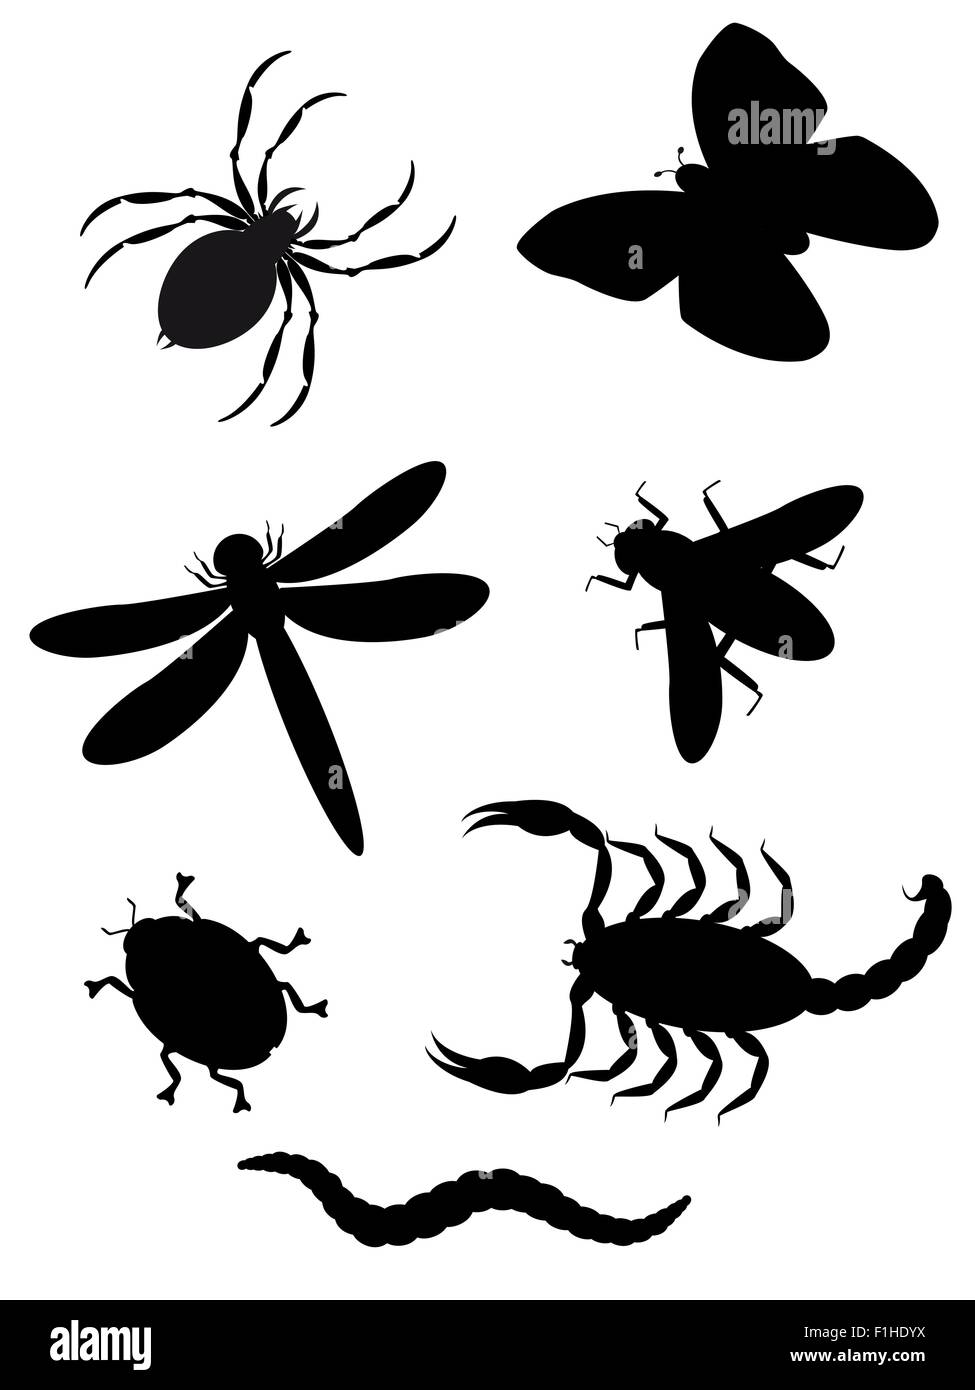 Käfer und Insekten Silhouette Vektor-illustration Stock Vektor